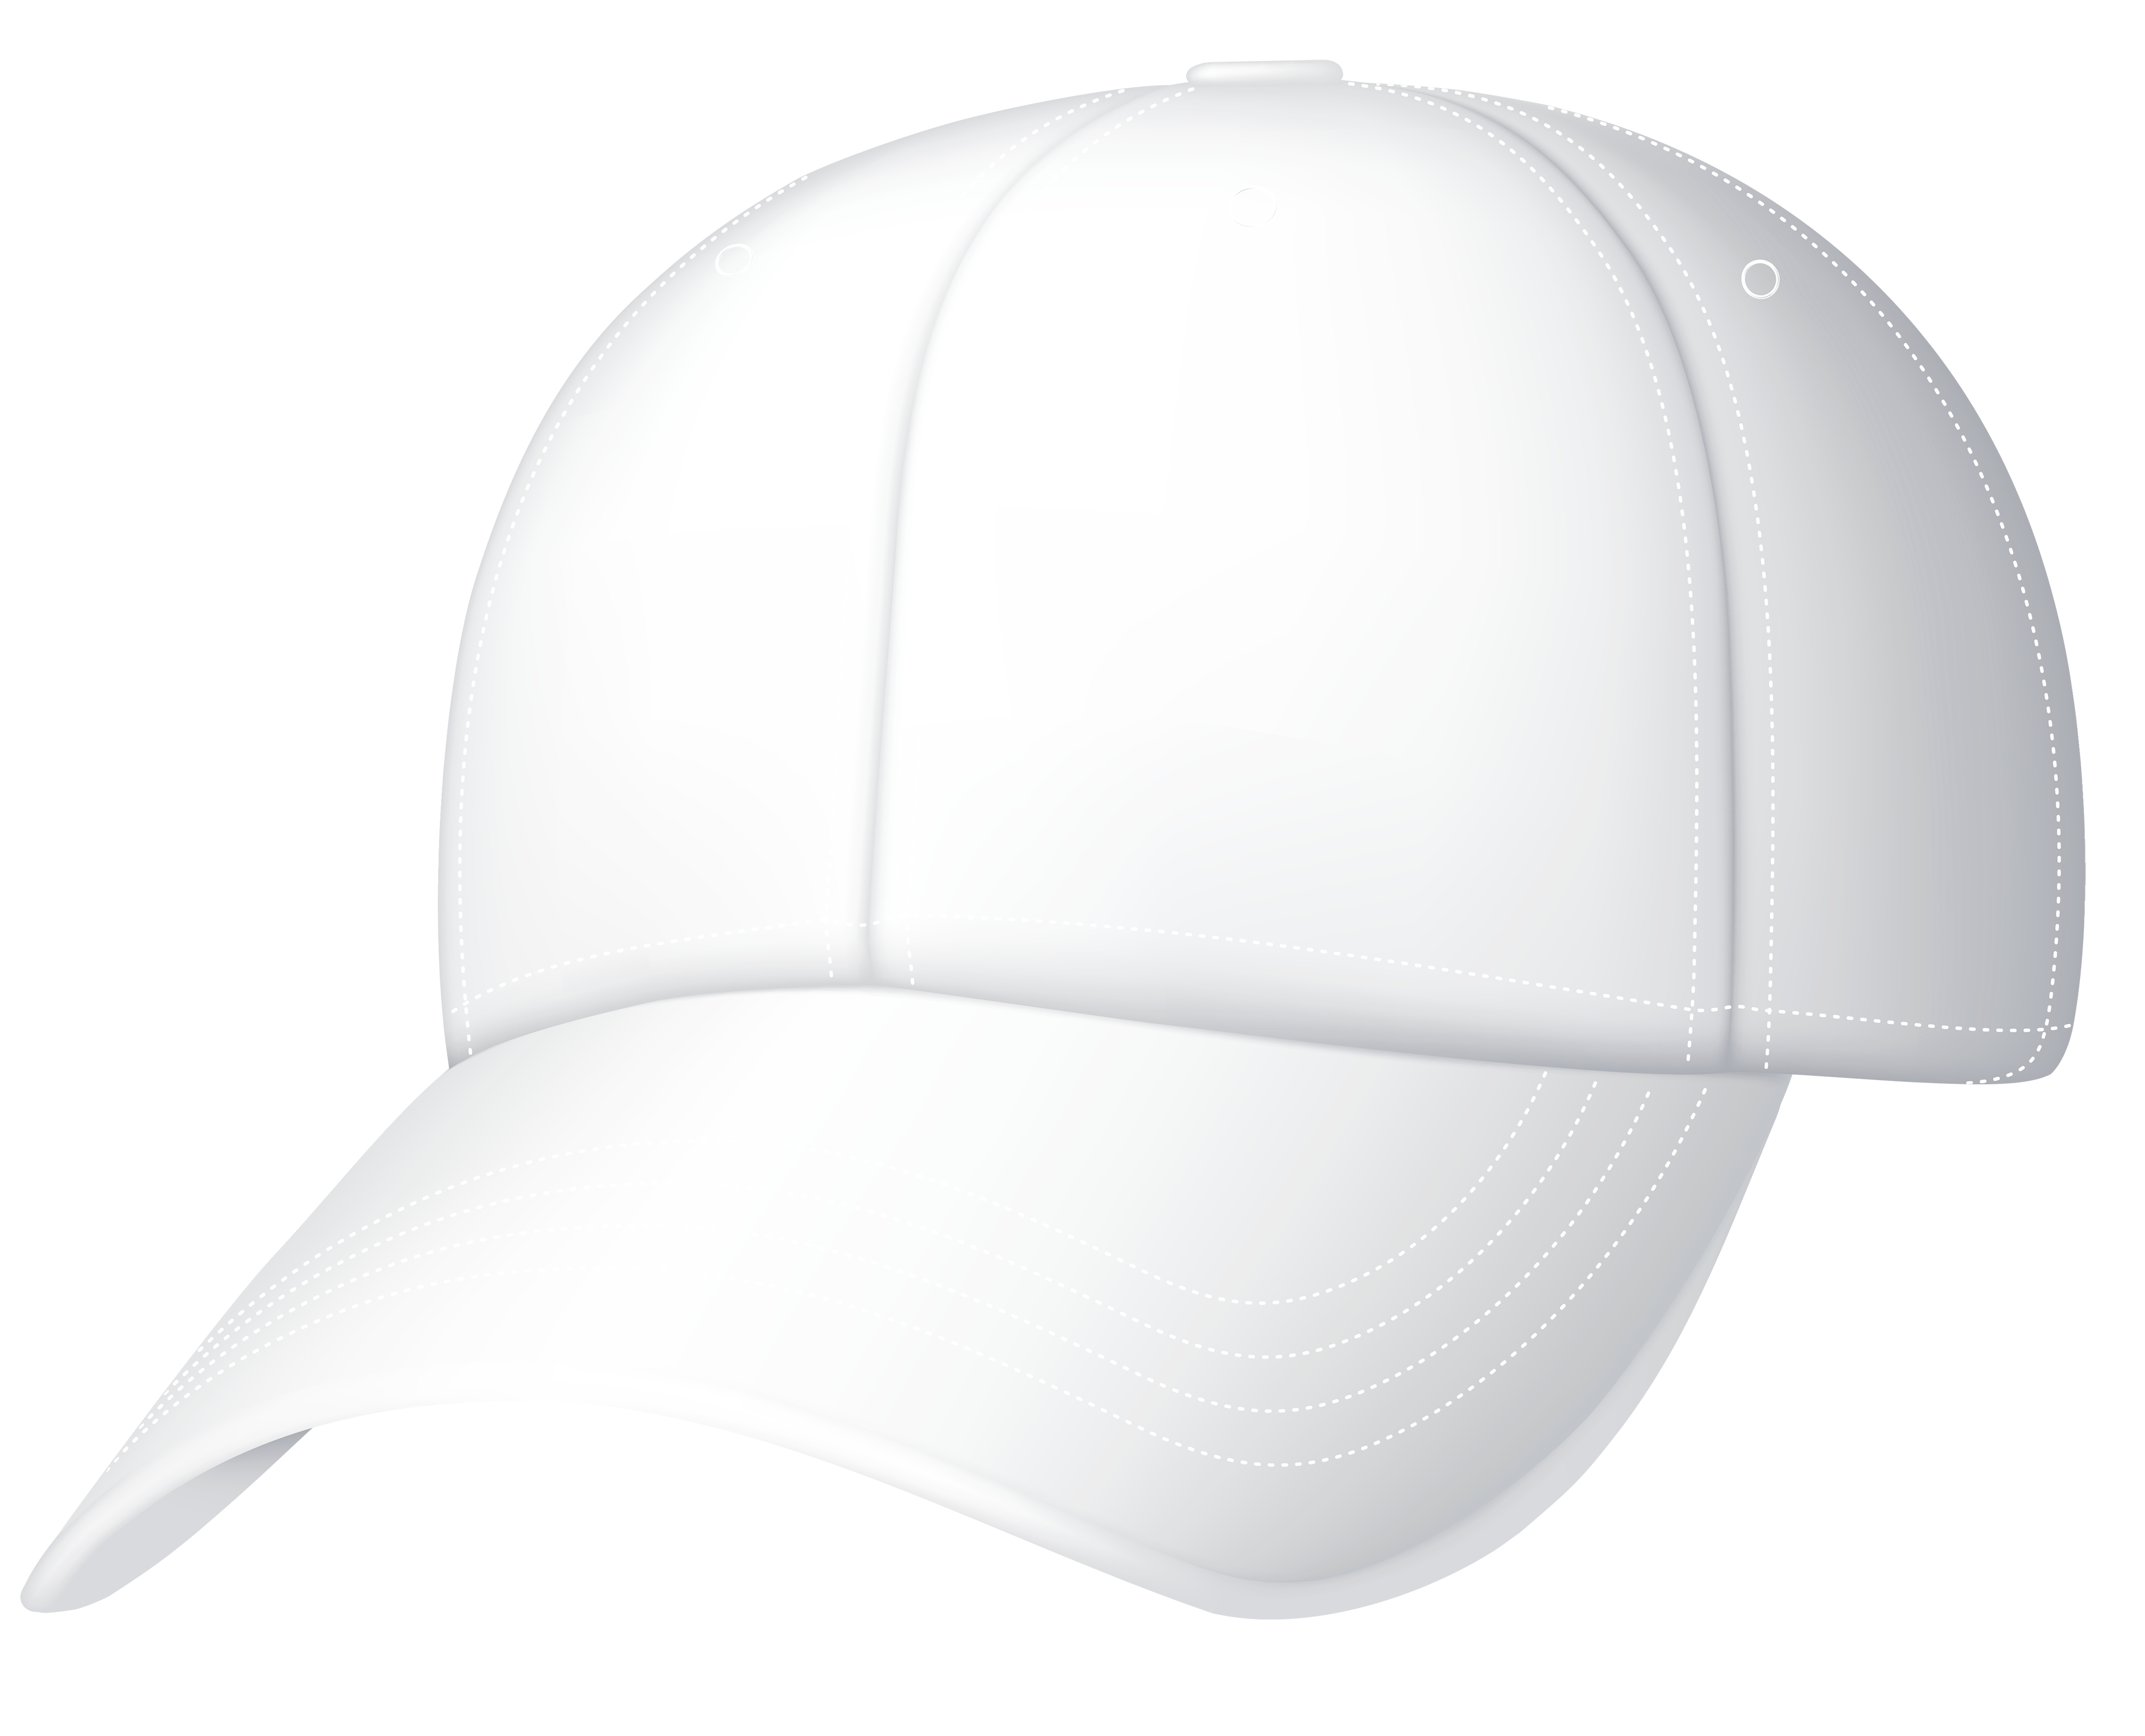 White Baseball Cap Clipart